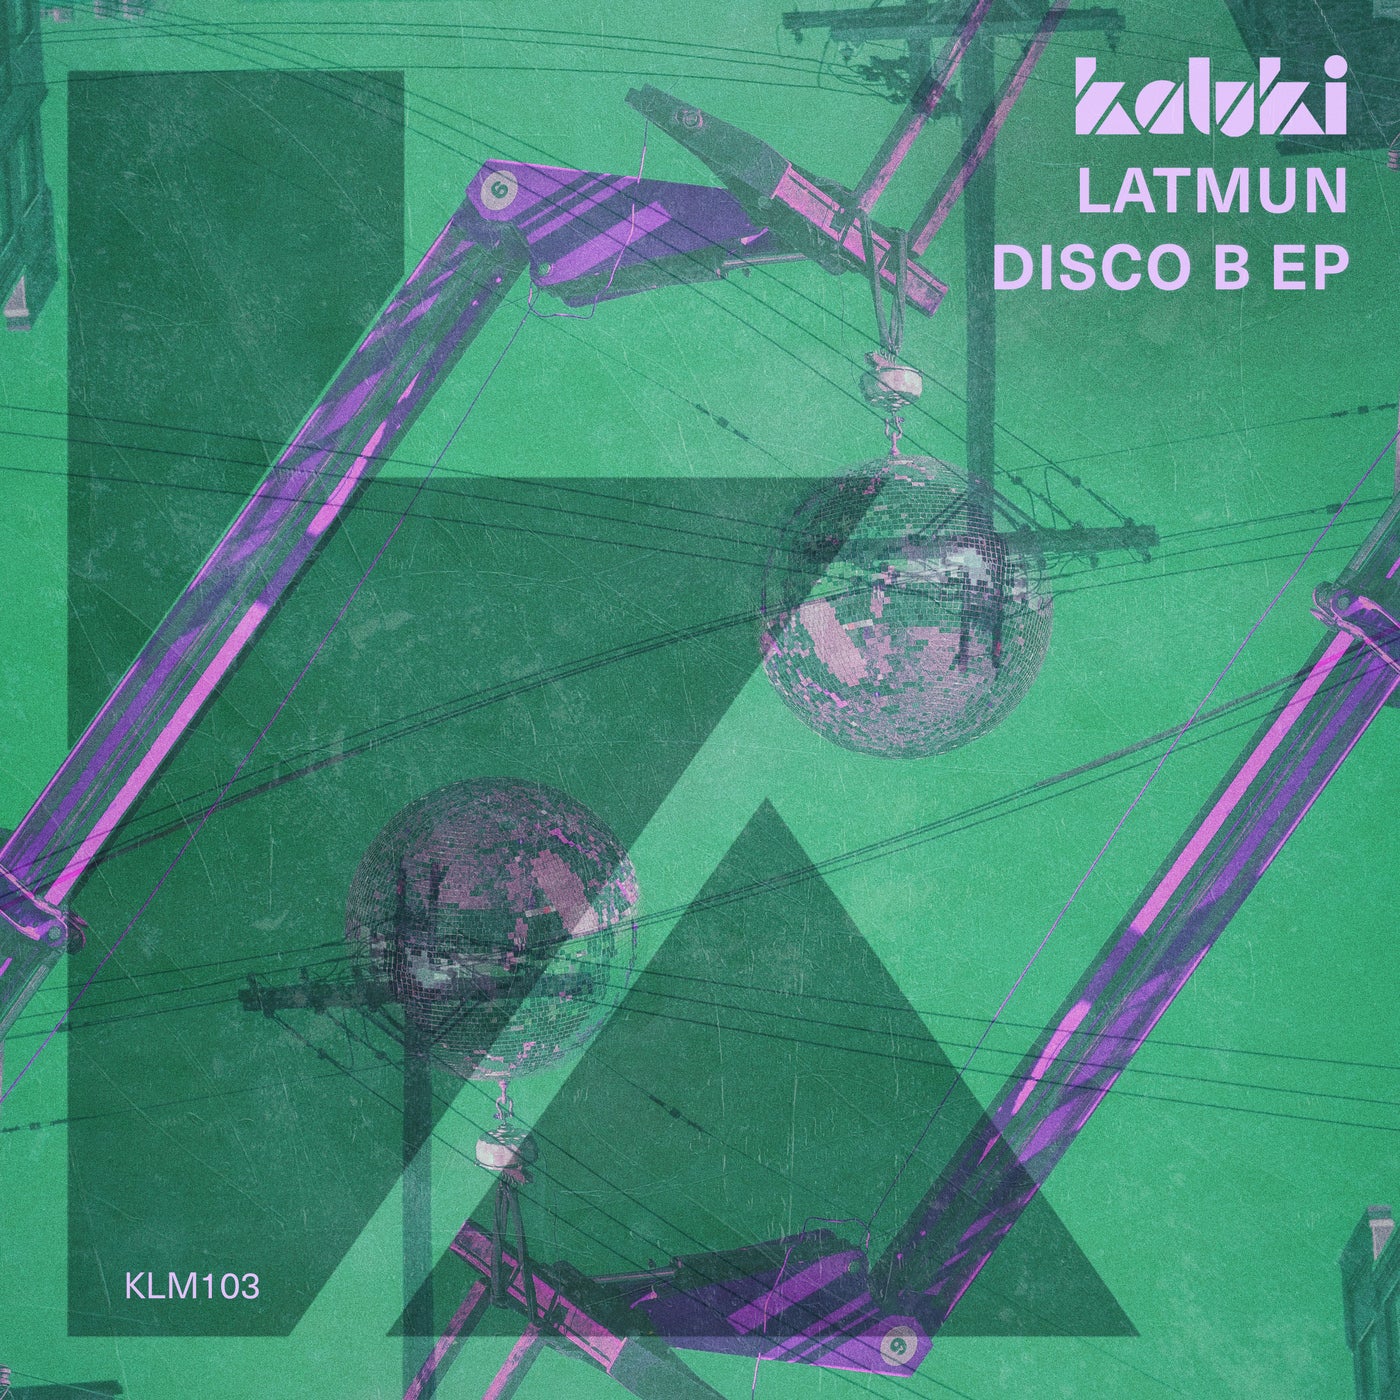 Download Disco B EP on Electrobuzz